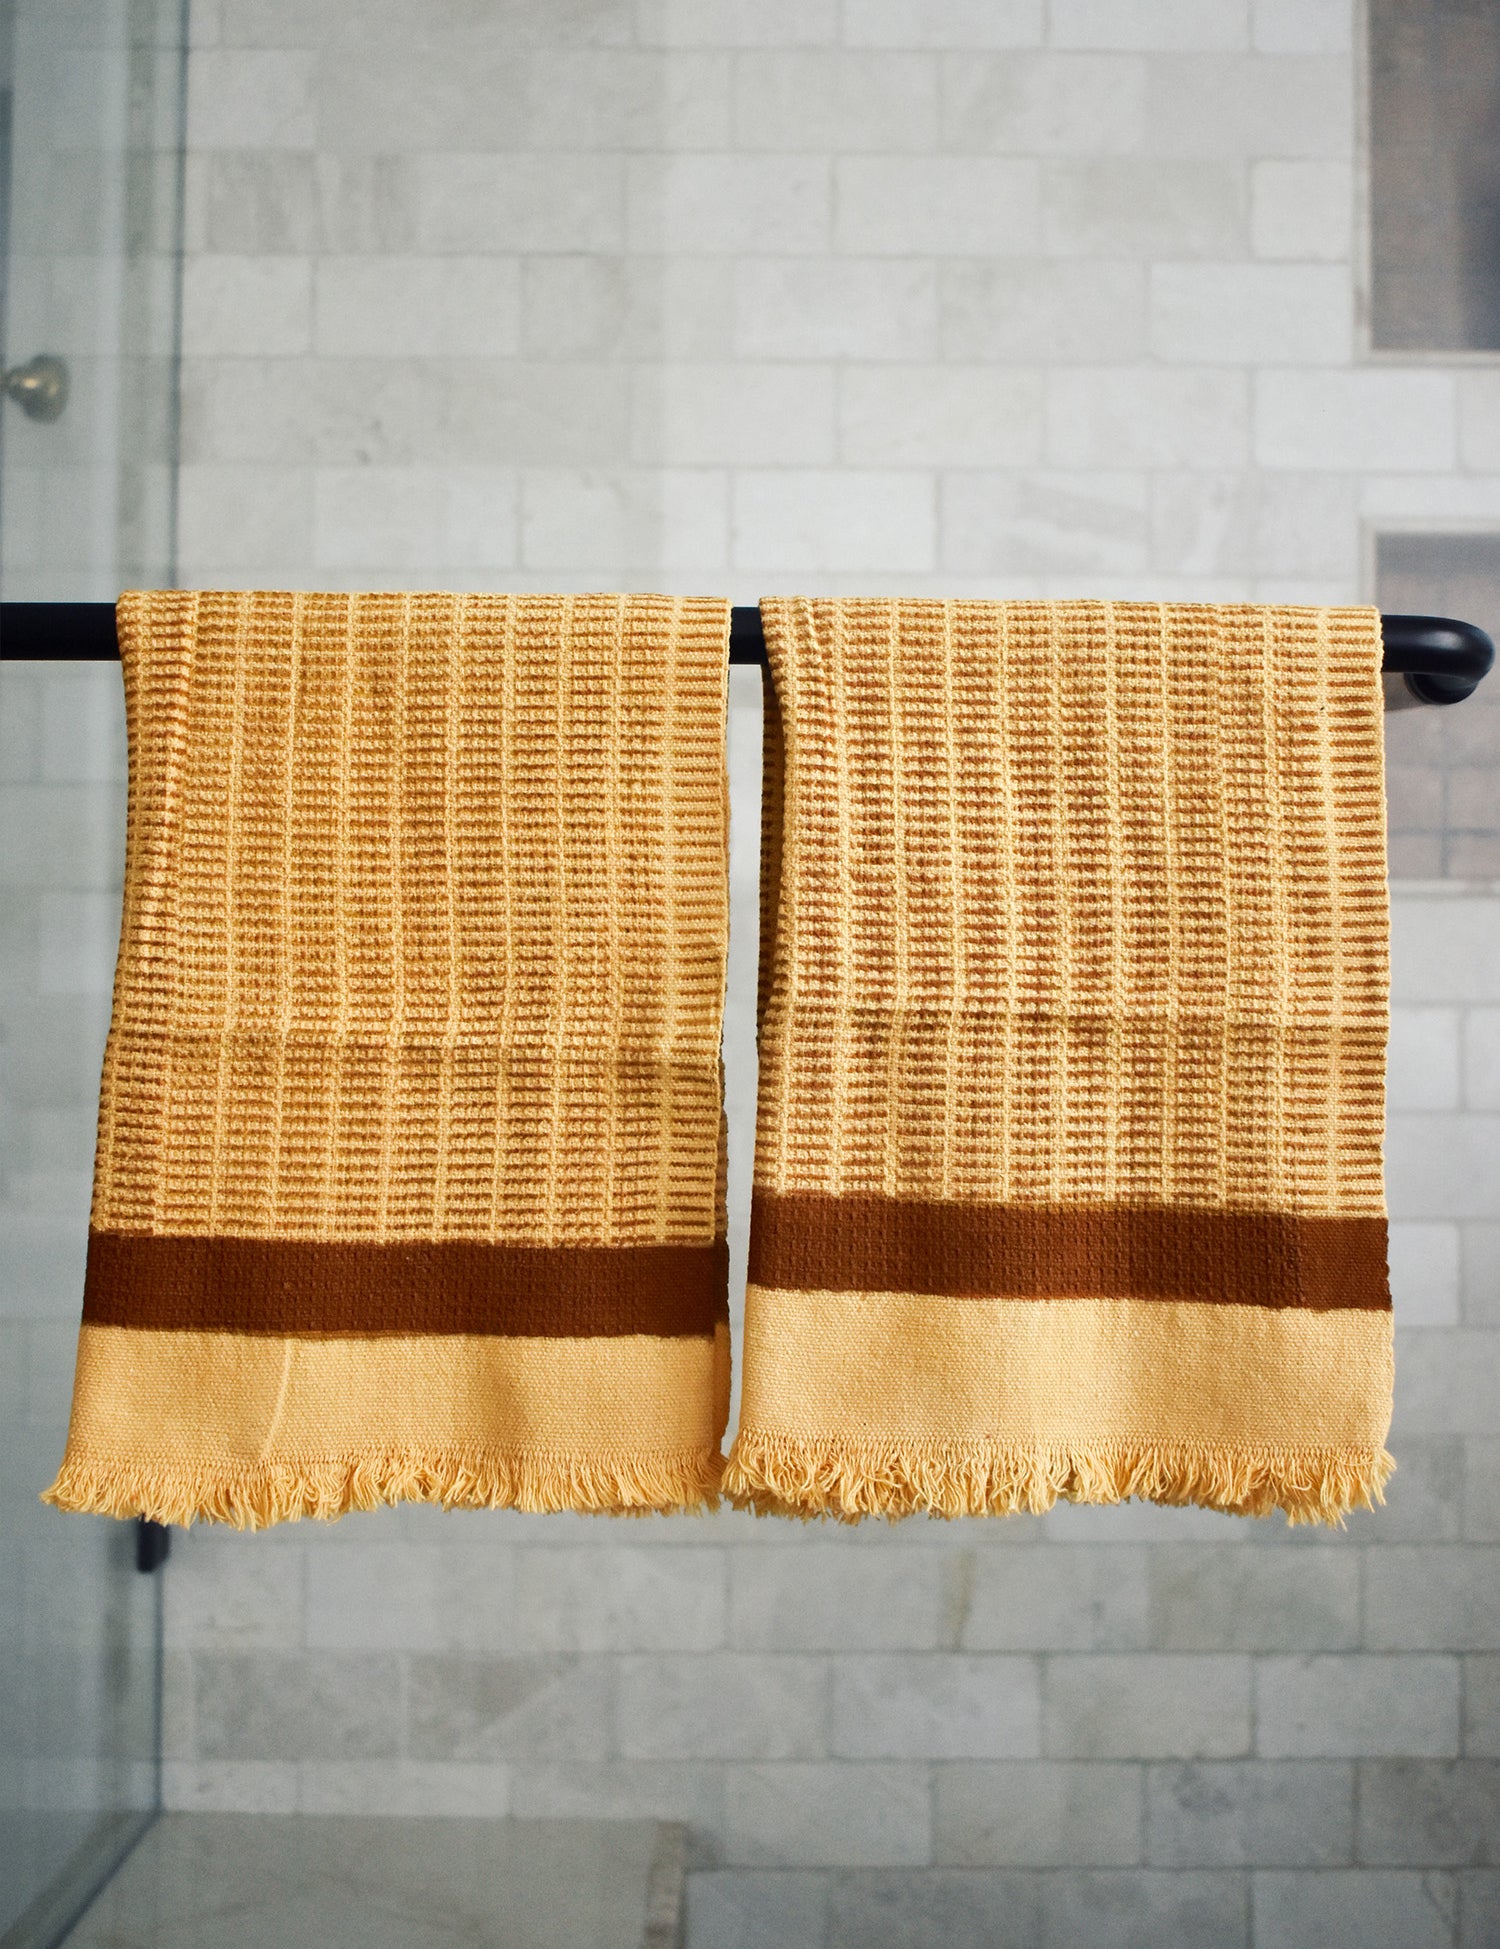 Block printed Feliz hand towels hanging on a black rod outside a shower